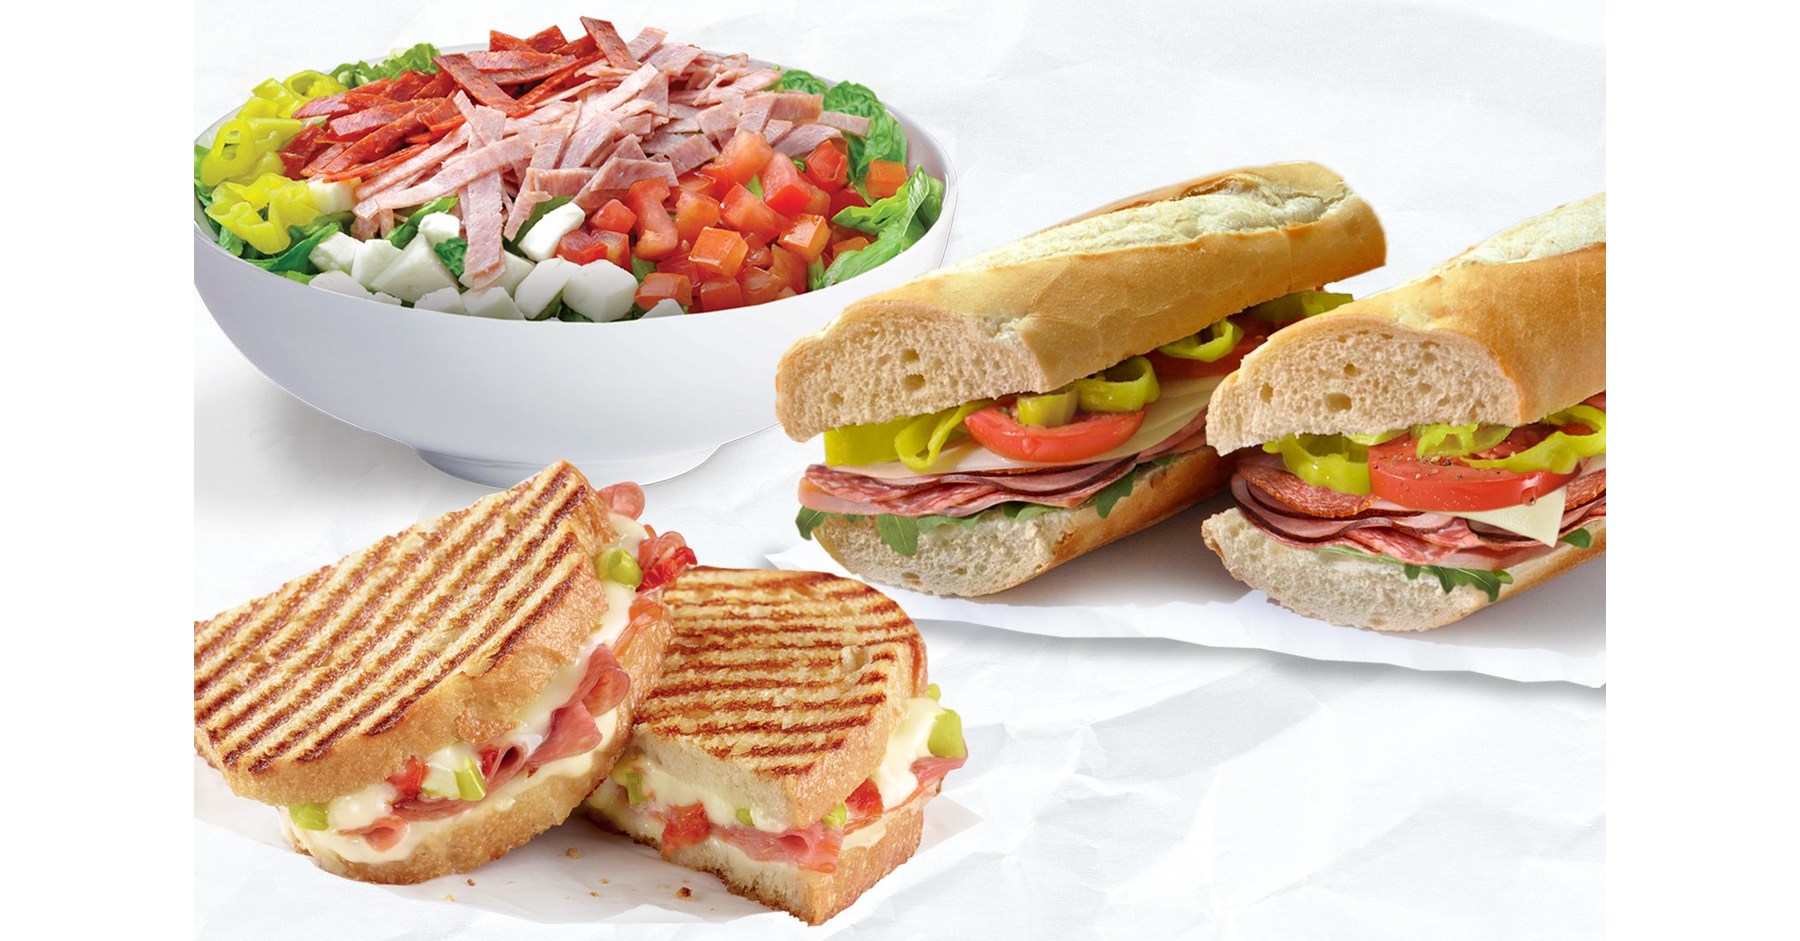 Configure Sandwich Box w/ Salad - Corner Bakery Cafe